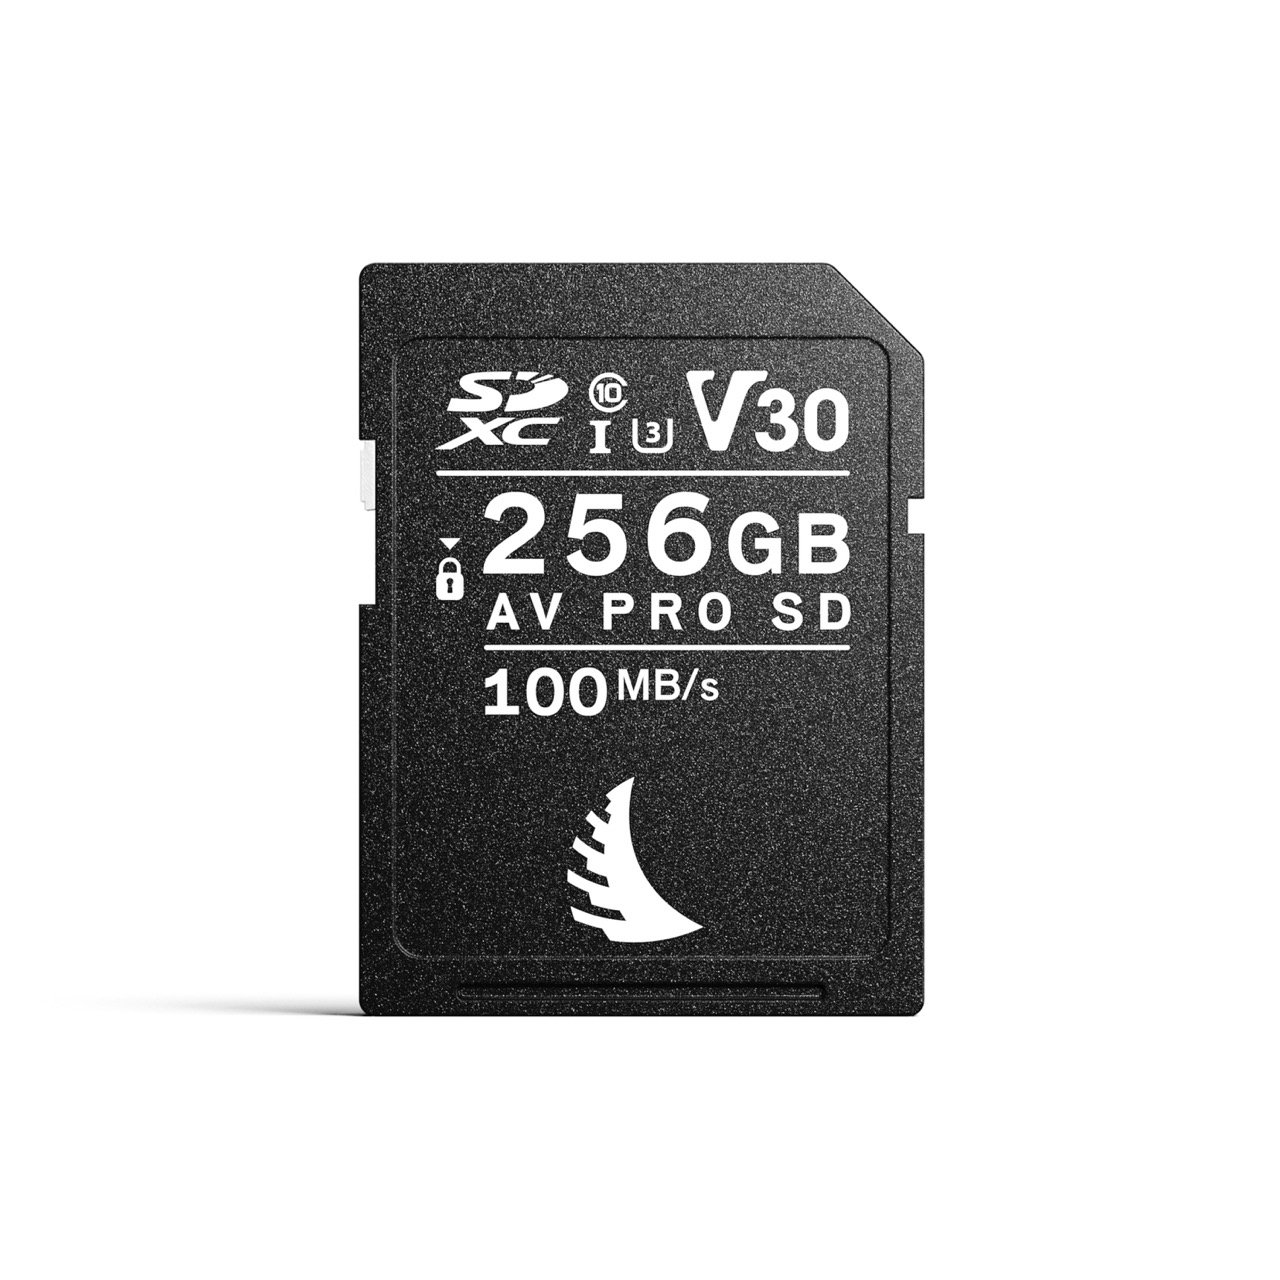 Angelbird AV PRO SD V30 256GB Speicherkarte, Frontalansicht